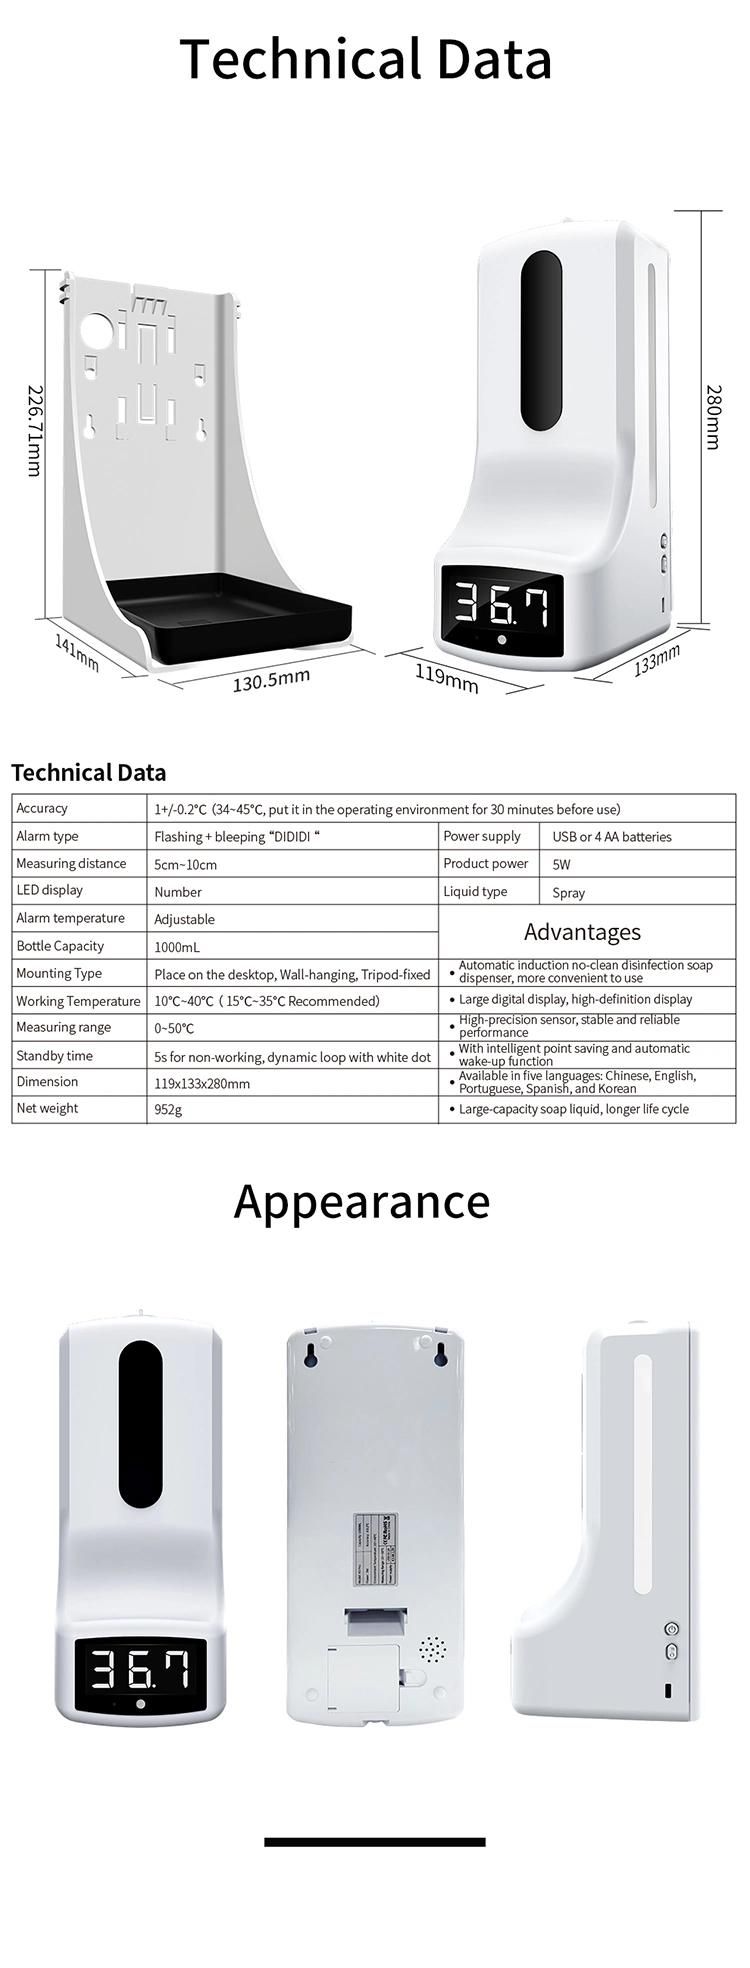 Saige 1000ml K9 PRO Plastic Automatic Temperature Measuring Soap Dispenser Sensor